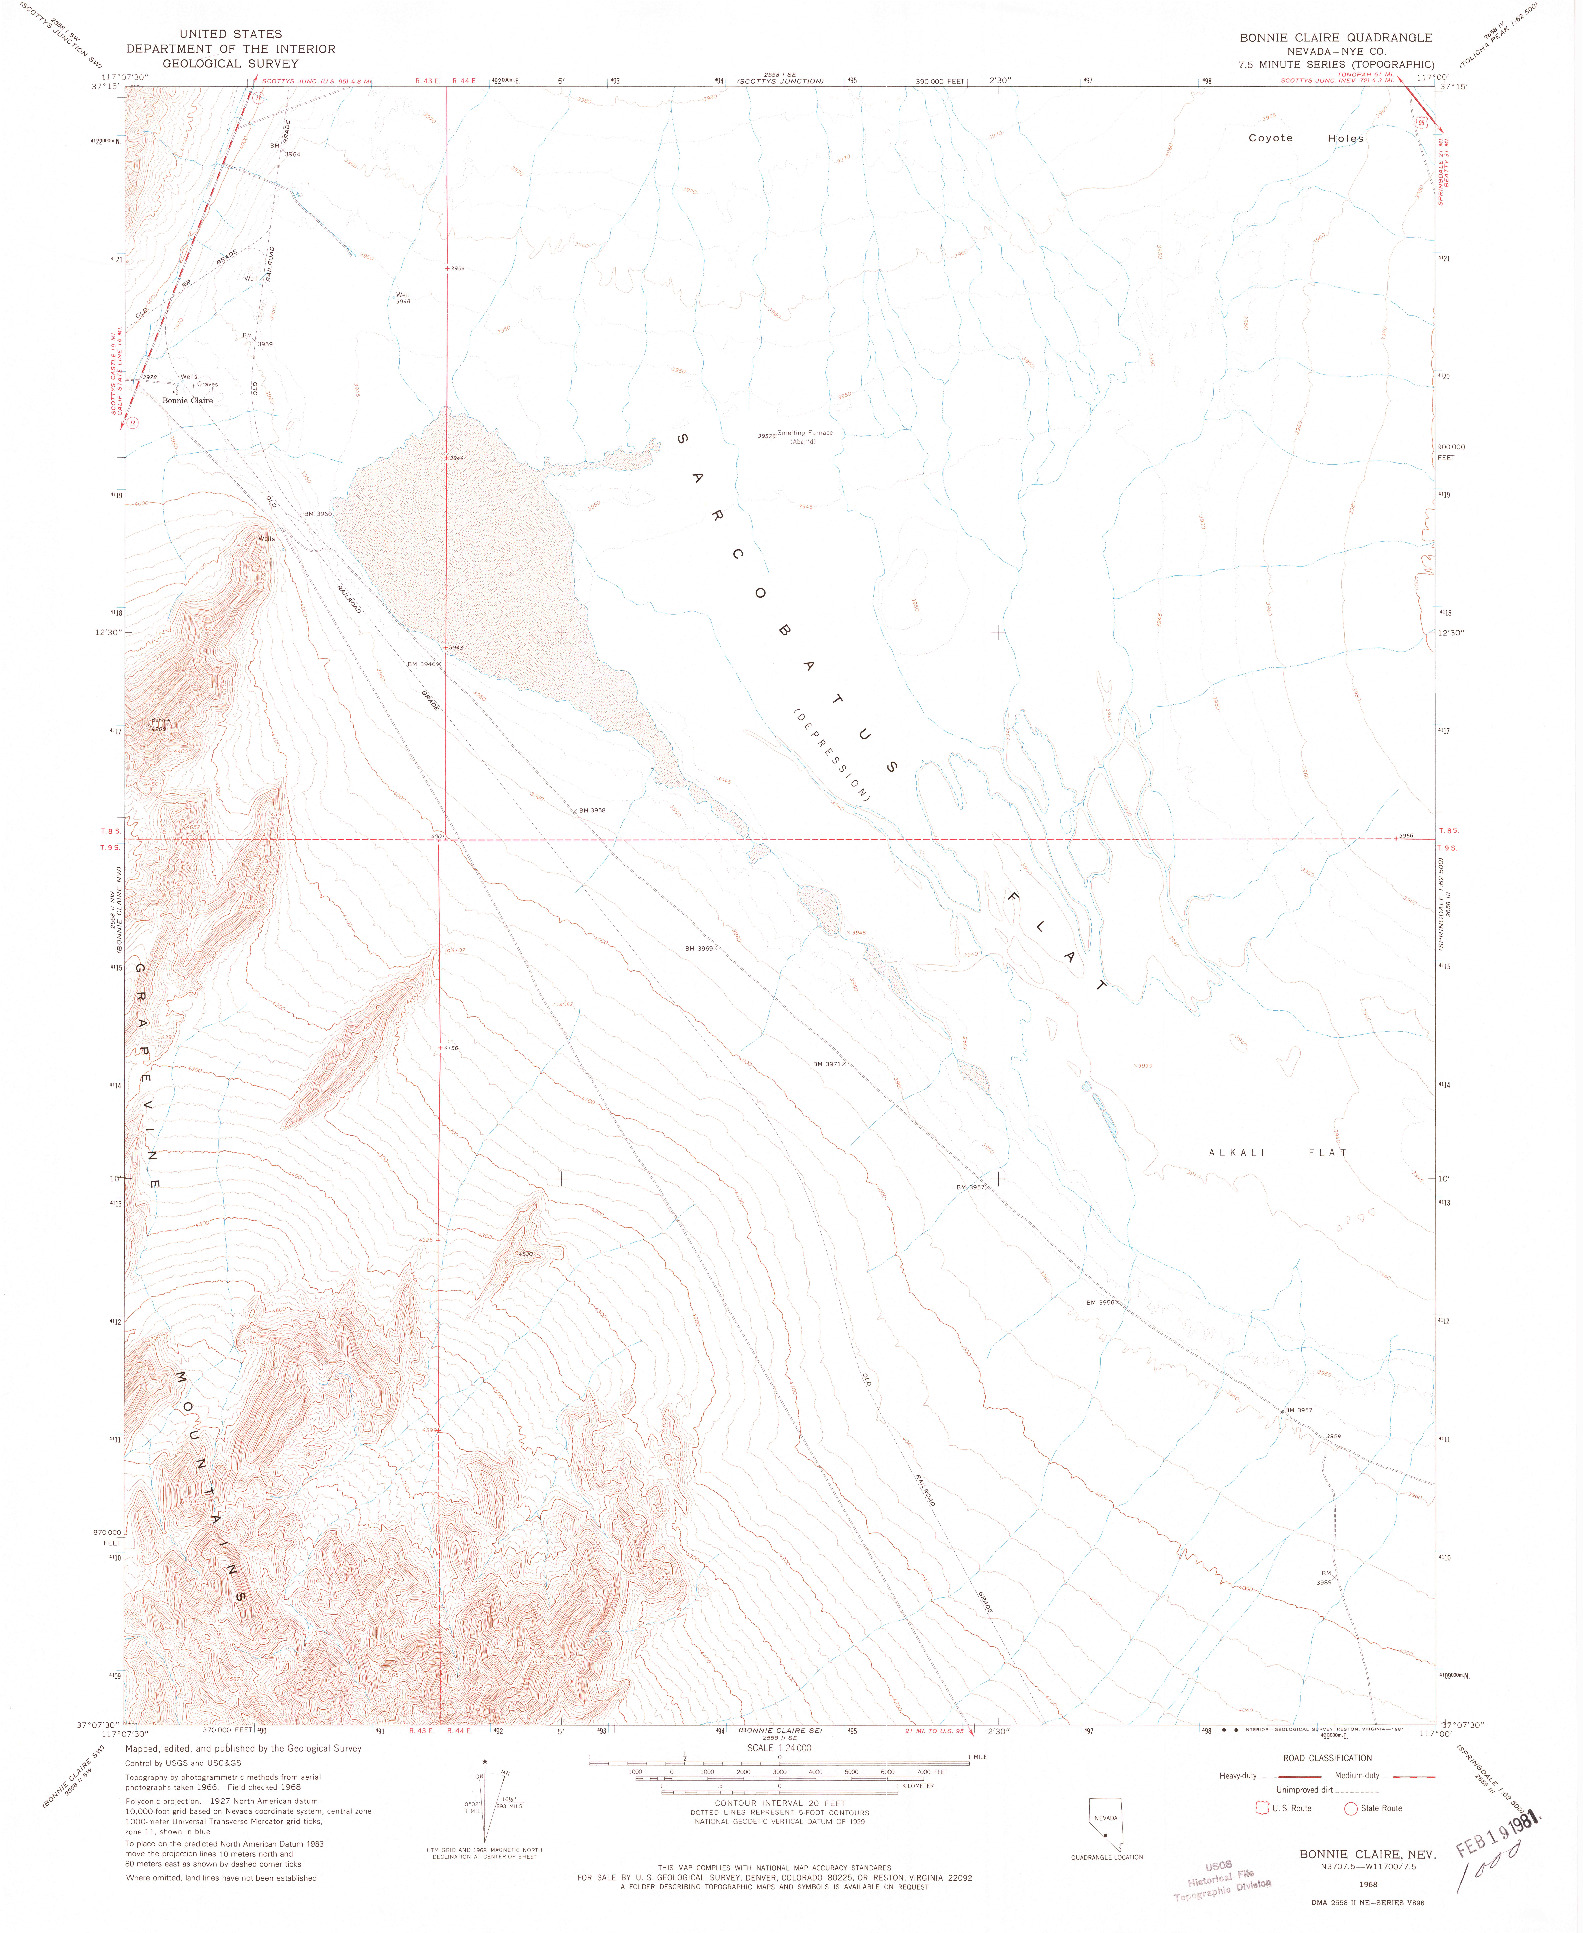 USGS 1:24000-SCALE QUADRANGLE FOR BONNIE CLAIRE, NV 1968